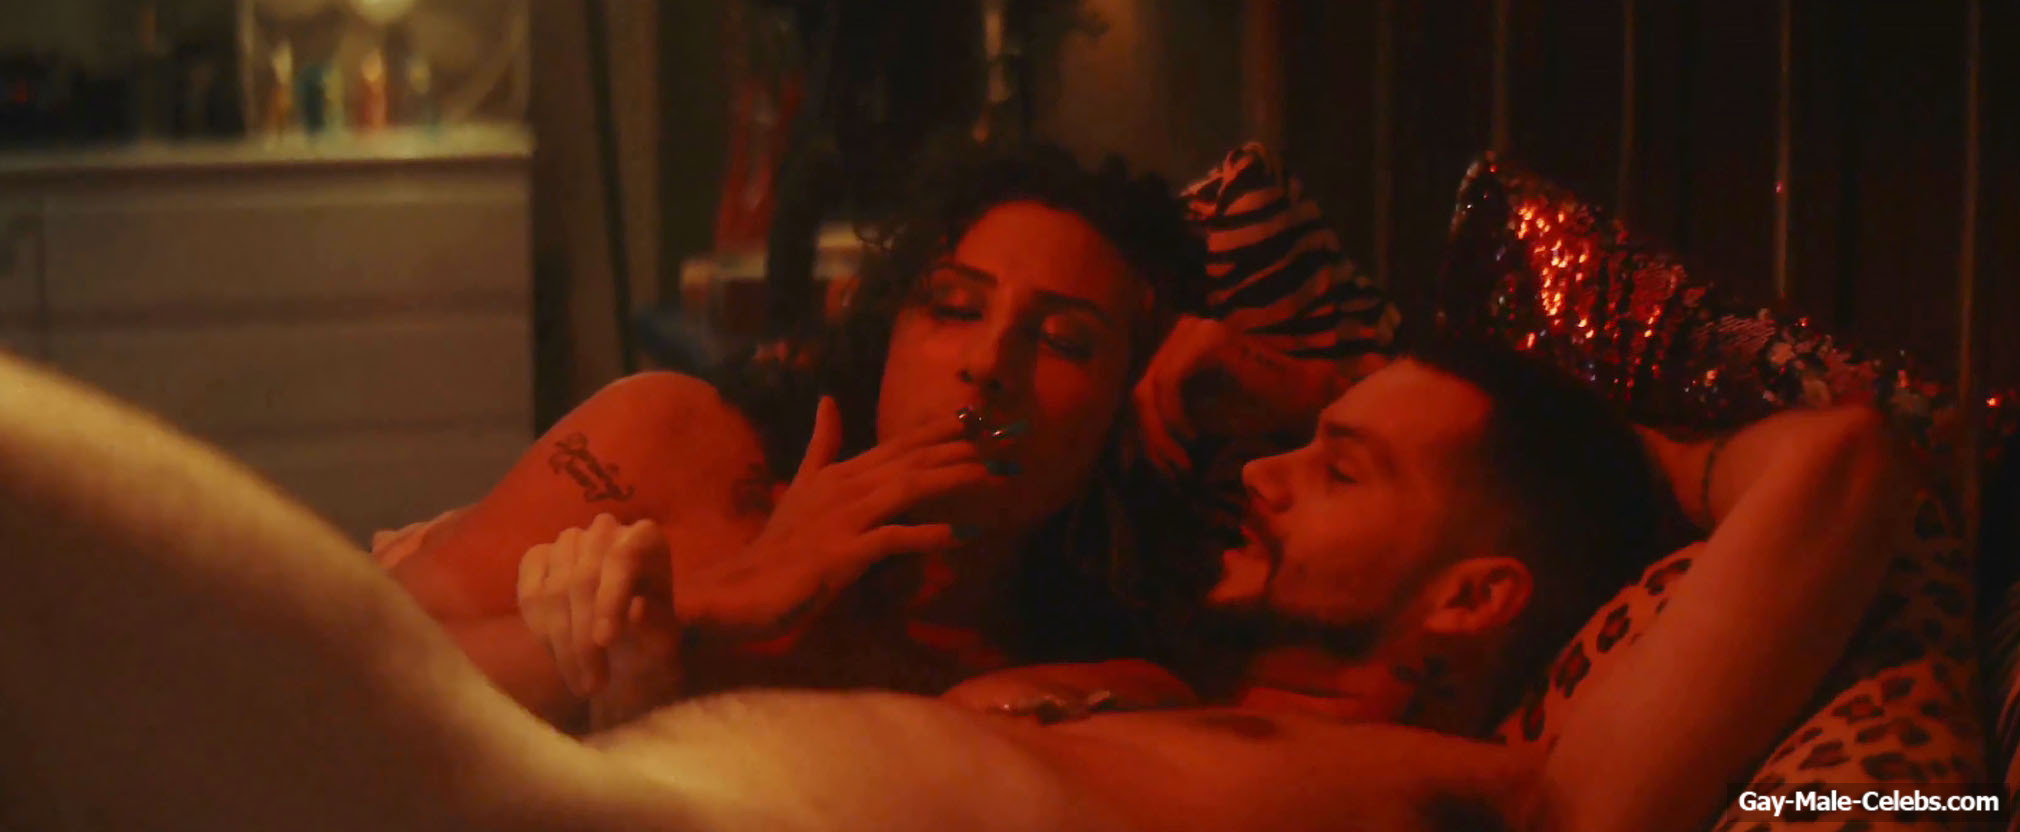 Dylan O’Brien Nude And Erotic Gay Scenes